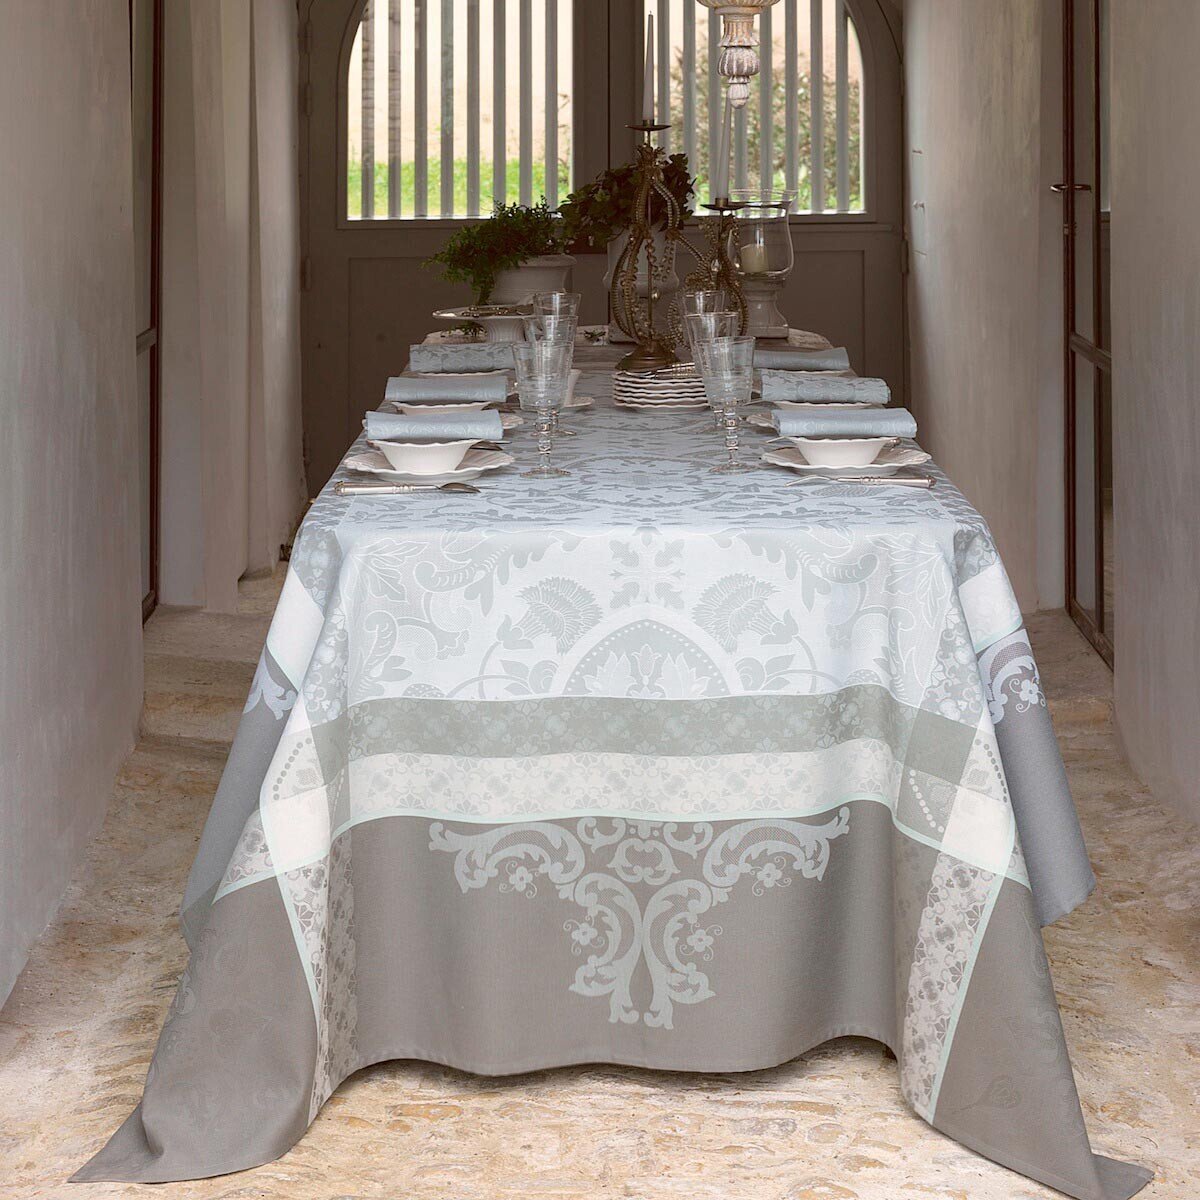 Le Jacquard Francais Azulejos Grey Tablecloth 69 x 69 Inch